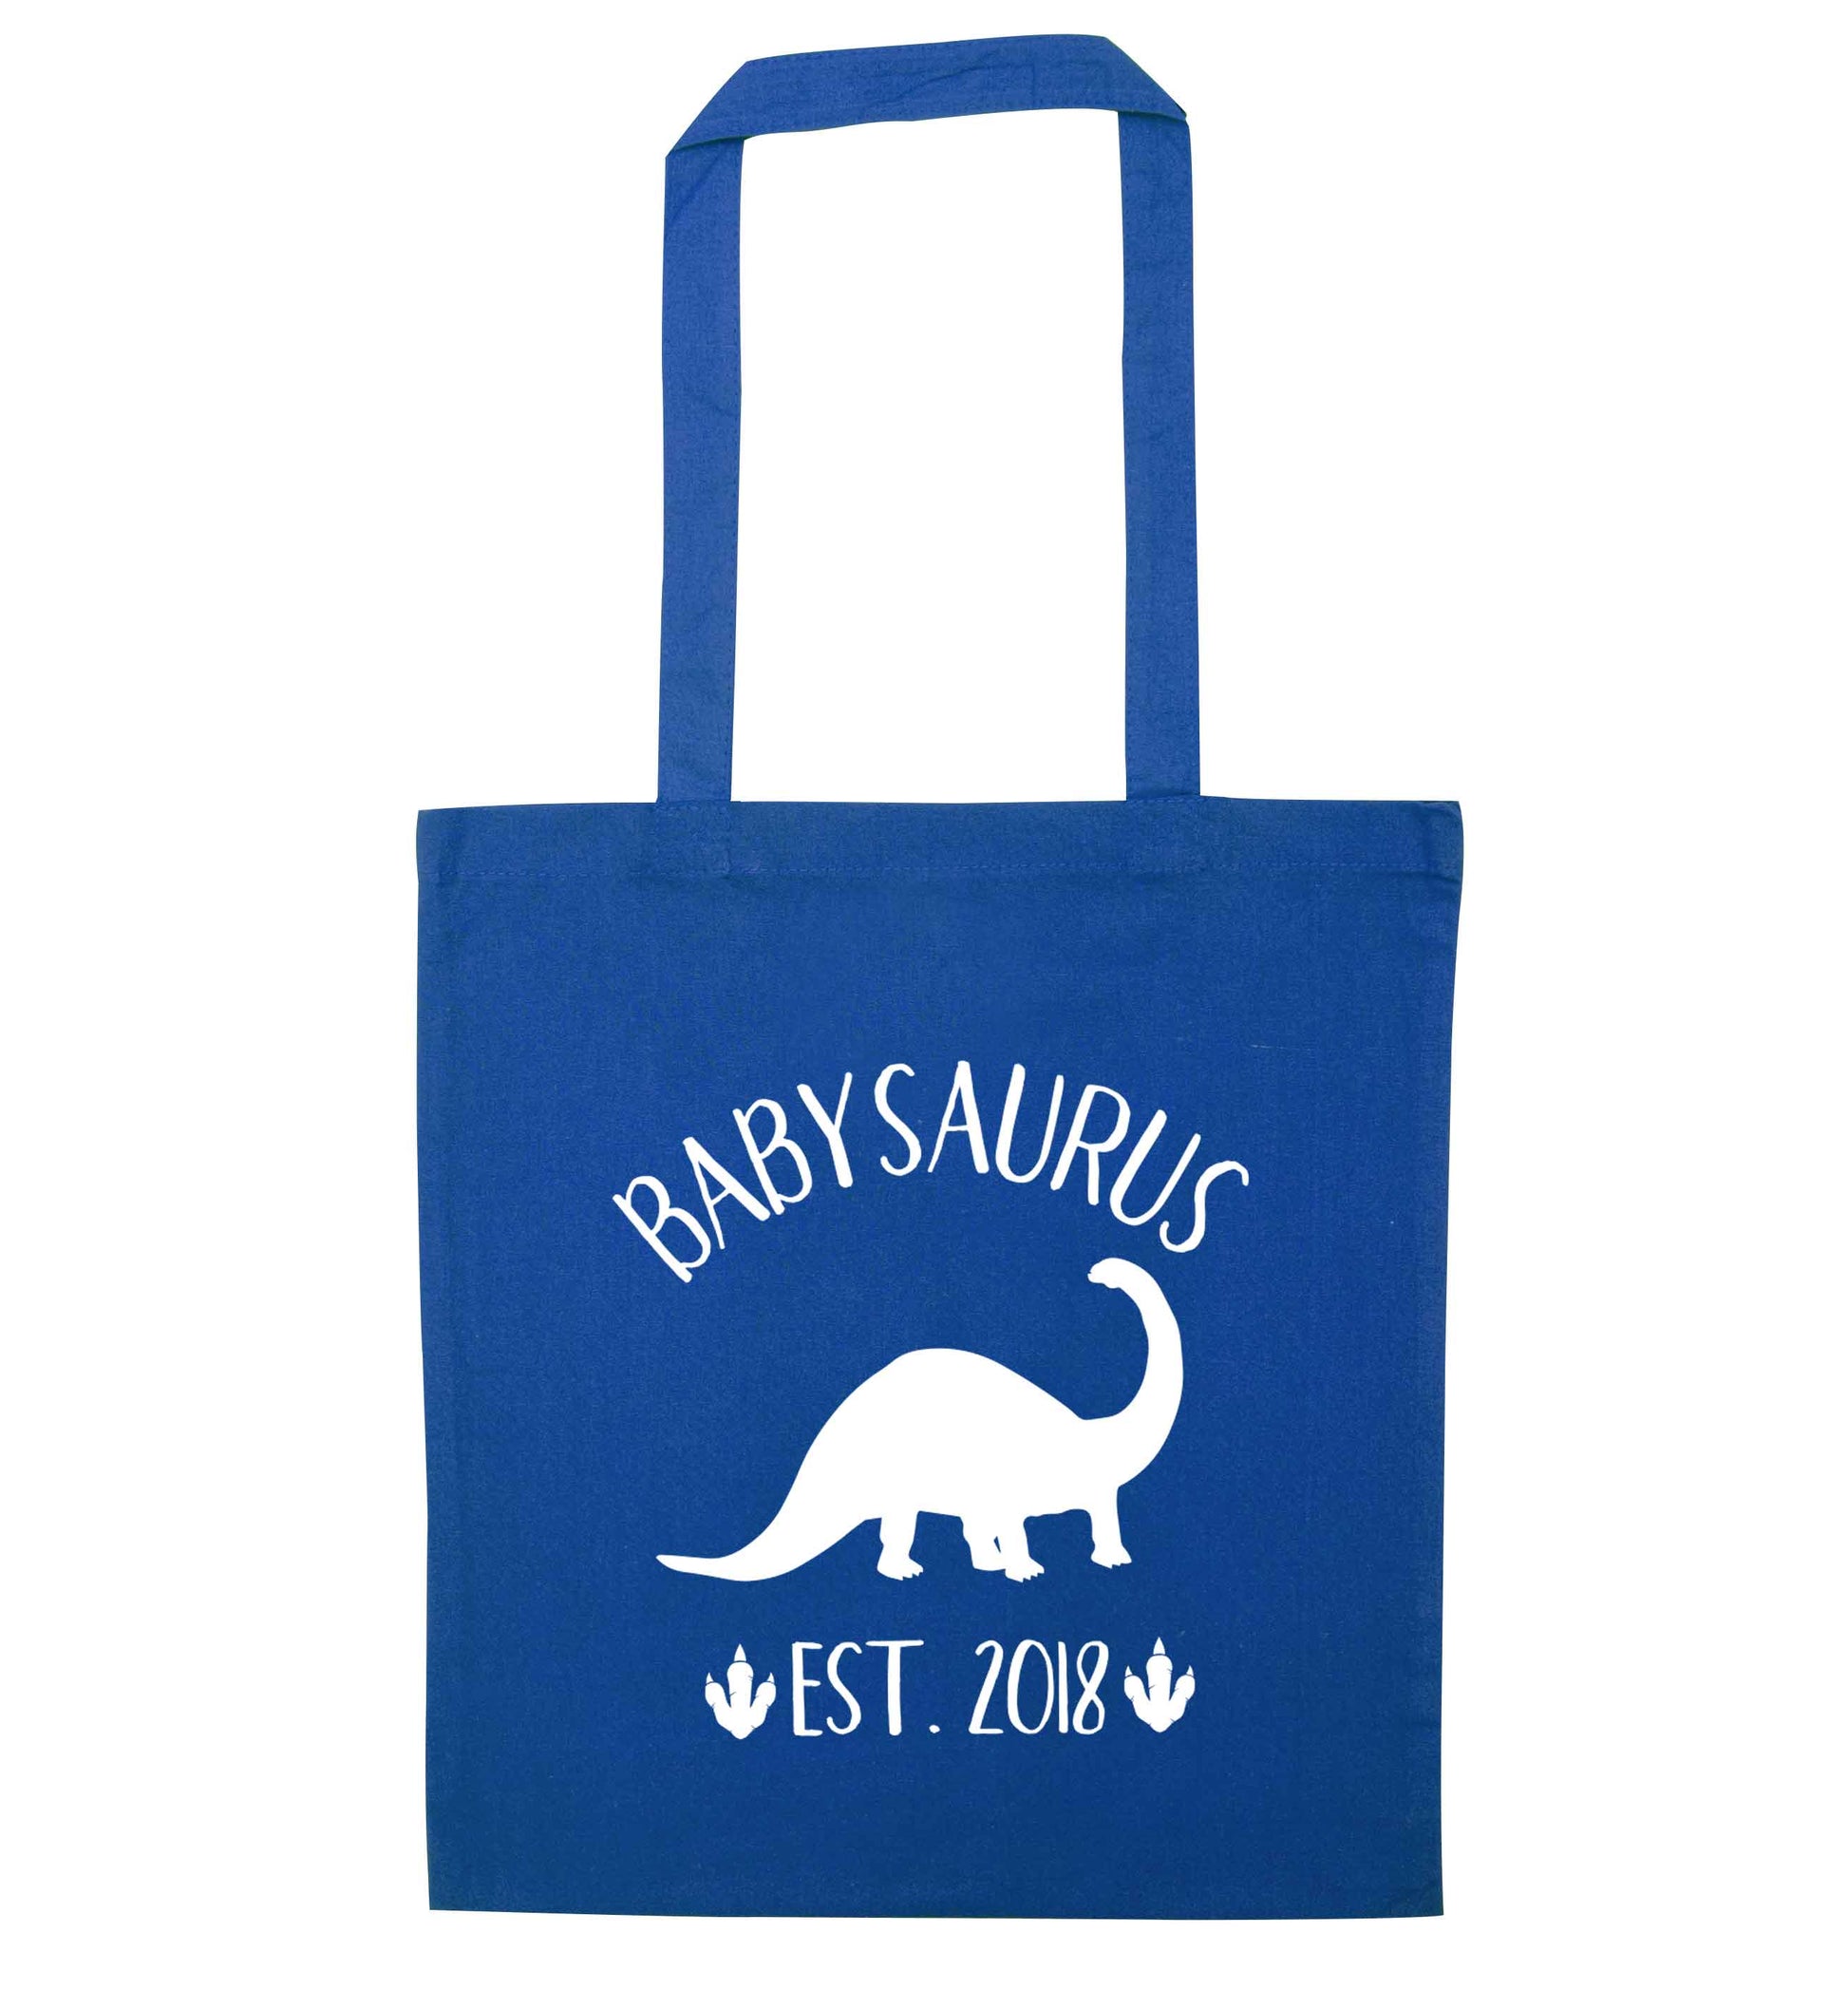 Personalised babysaurus since (custom date) blue tote bag